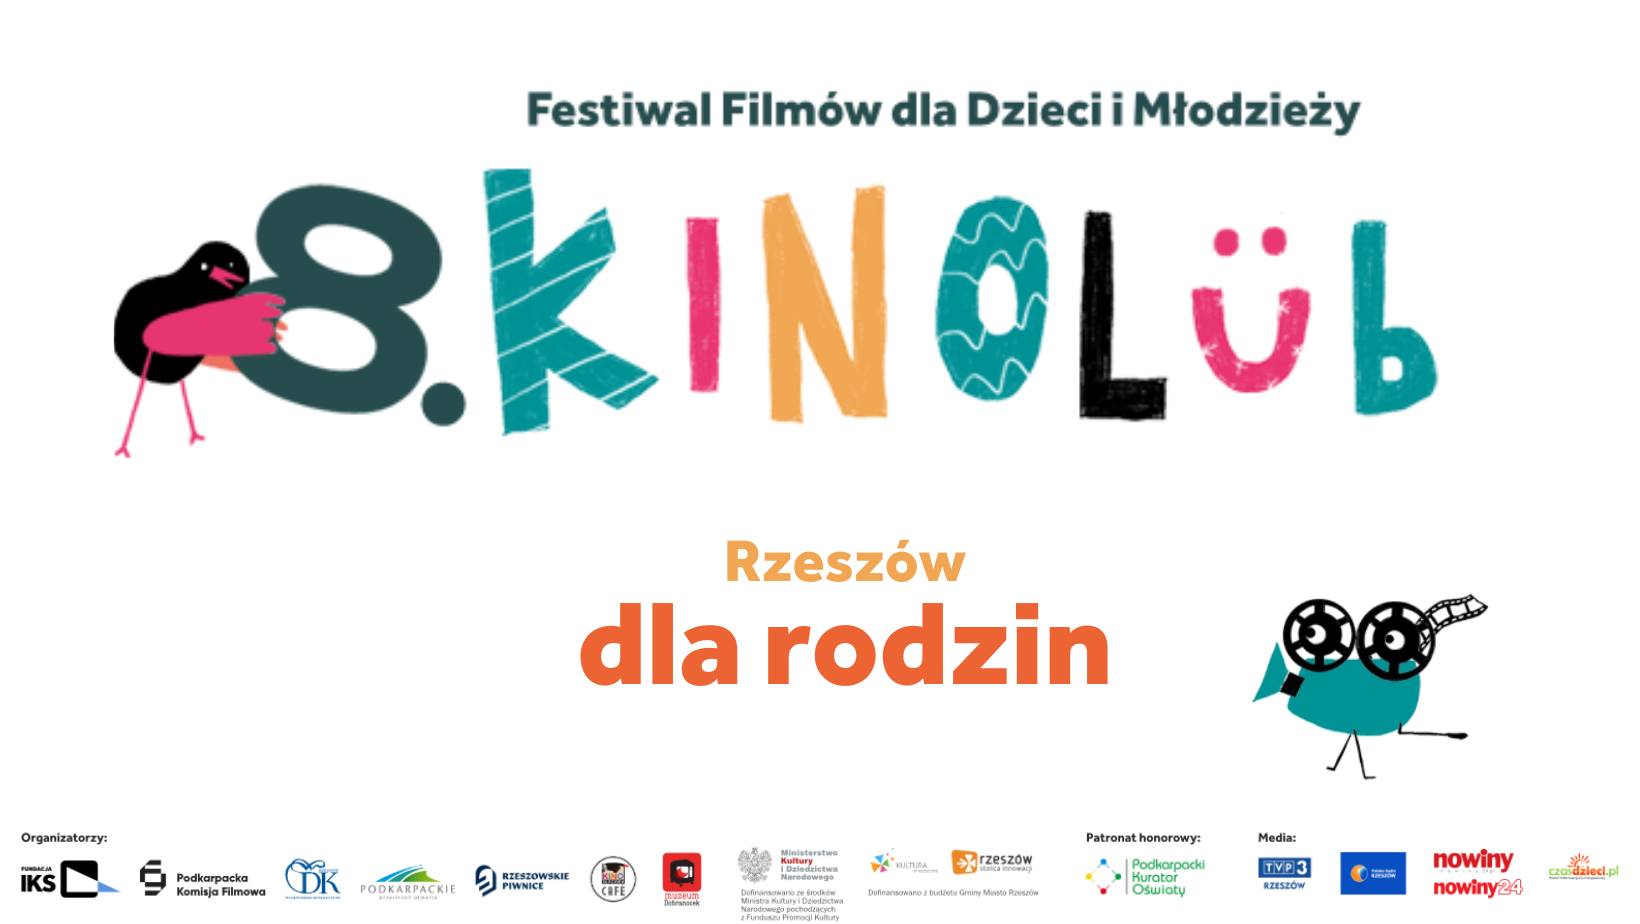 8. Festiwal KINOLUB 